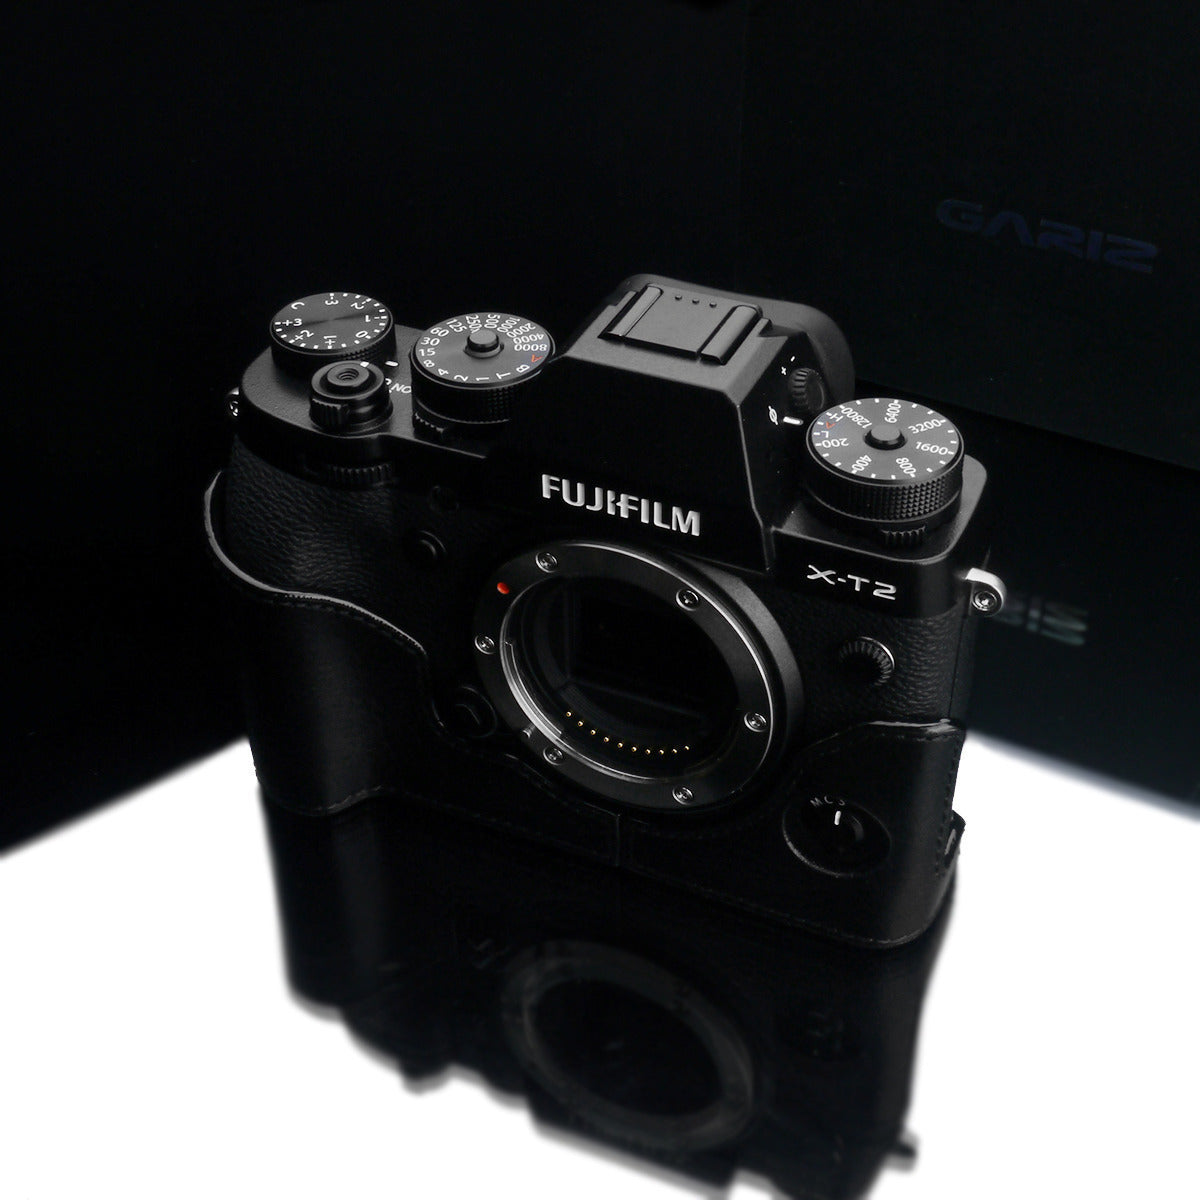 Gariz XS-CHXT2BK Black Genuine Leather Half Case for Fujifilm Fuji X-T2 / X-T3